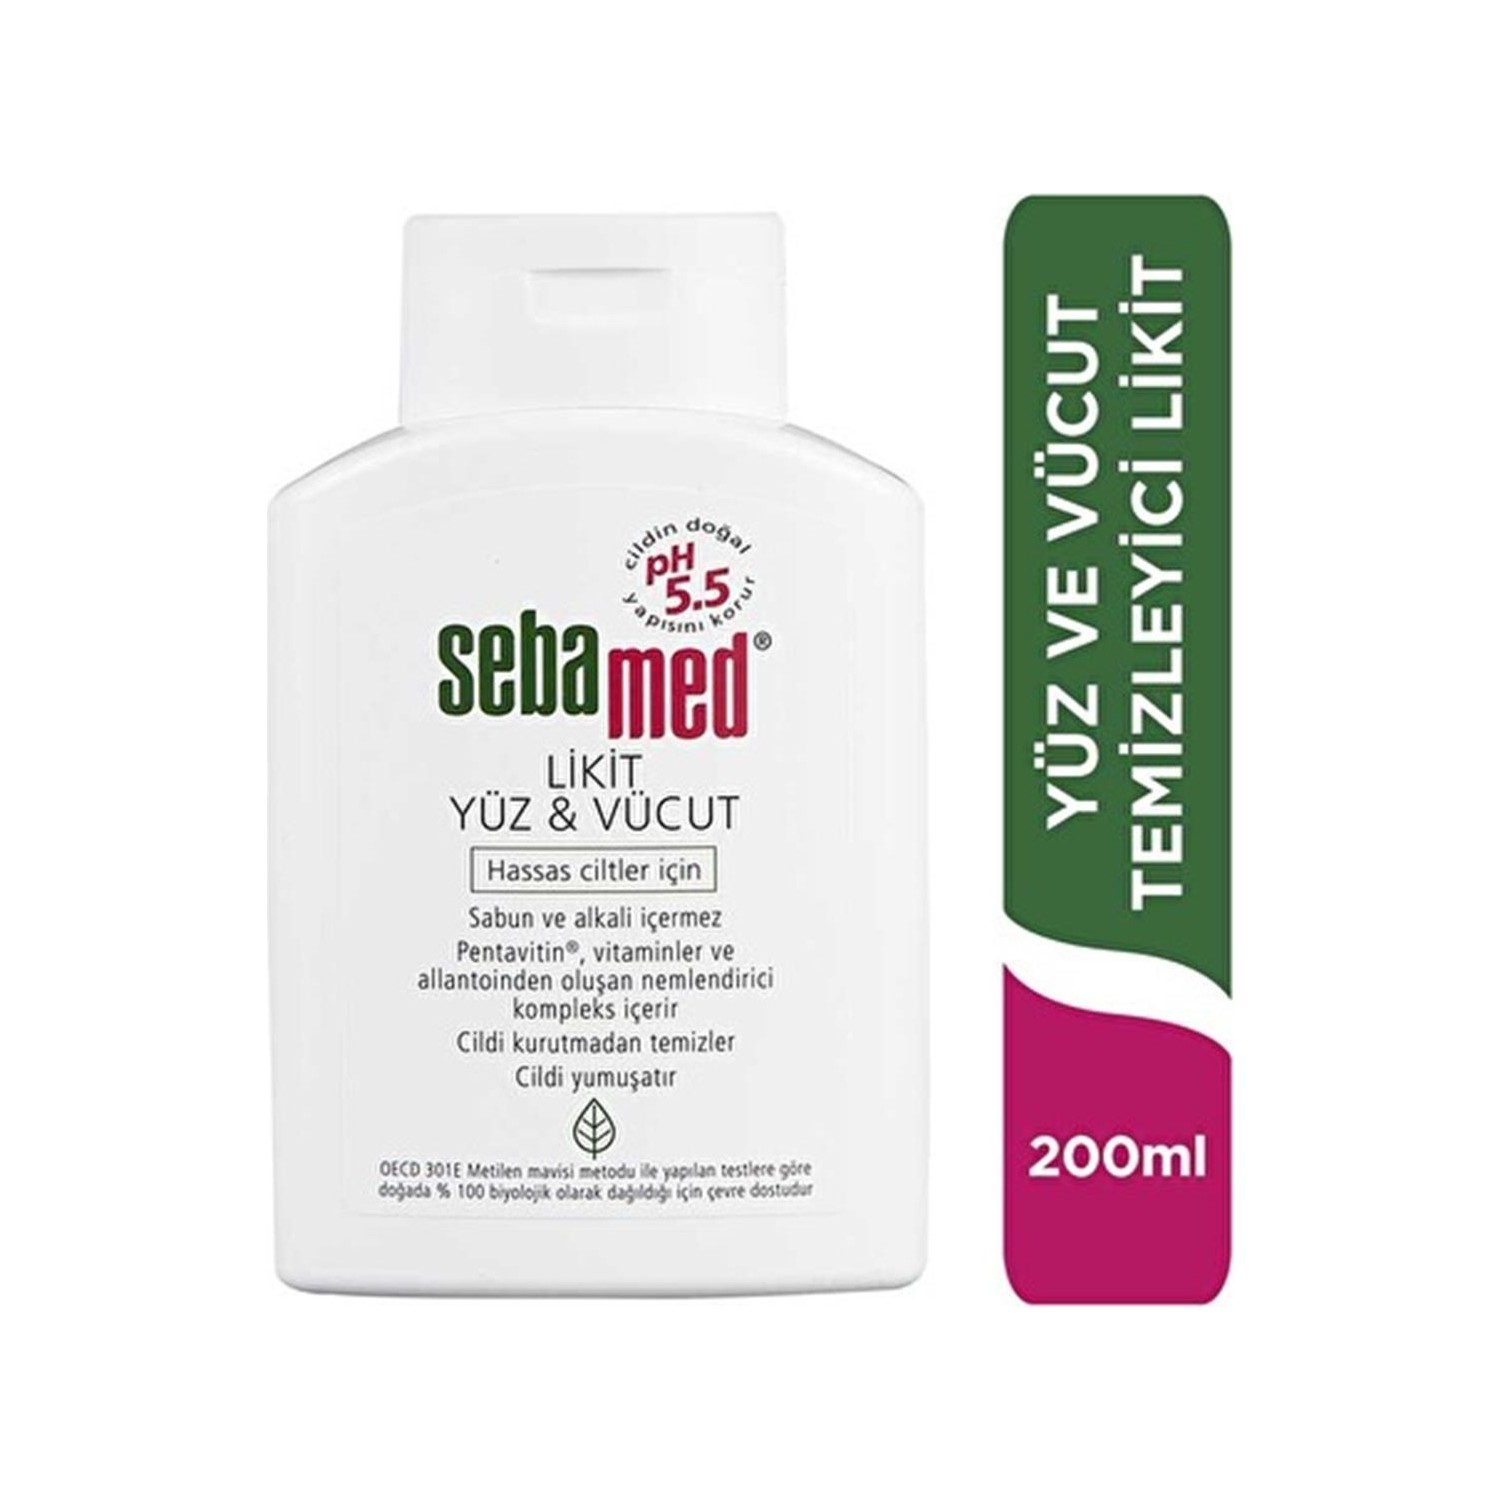 Очищающее средство Sebamed Liquid для лица и тела, 200 мл цена и фото